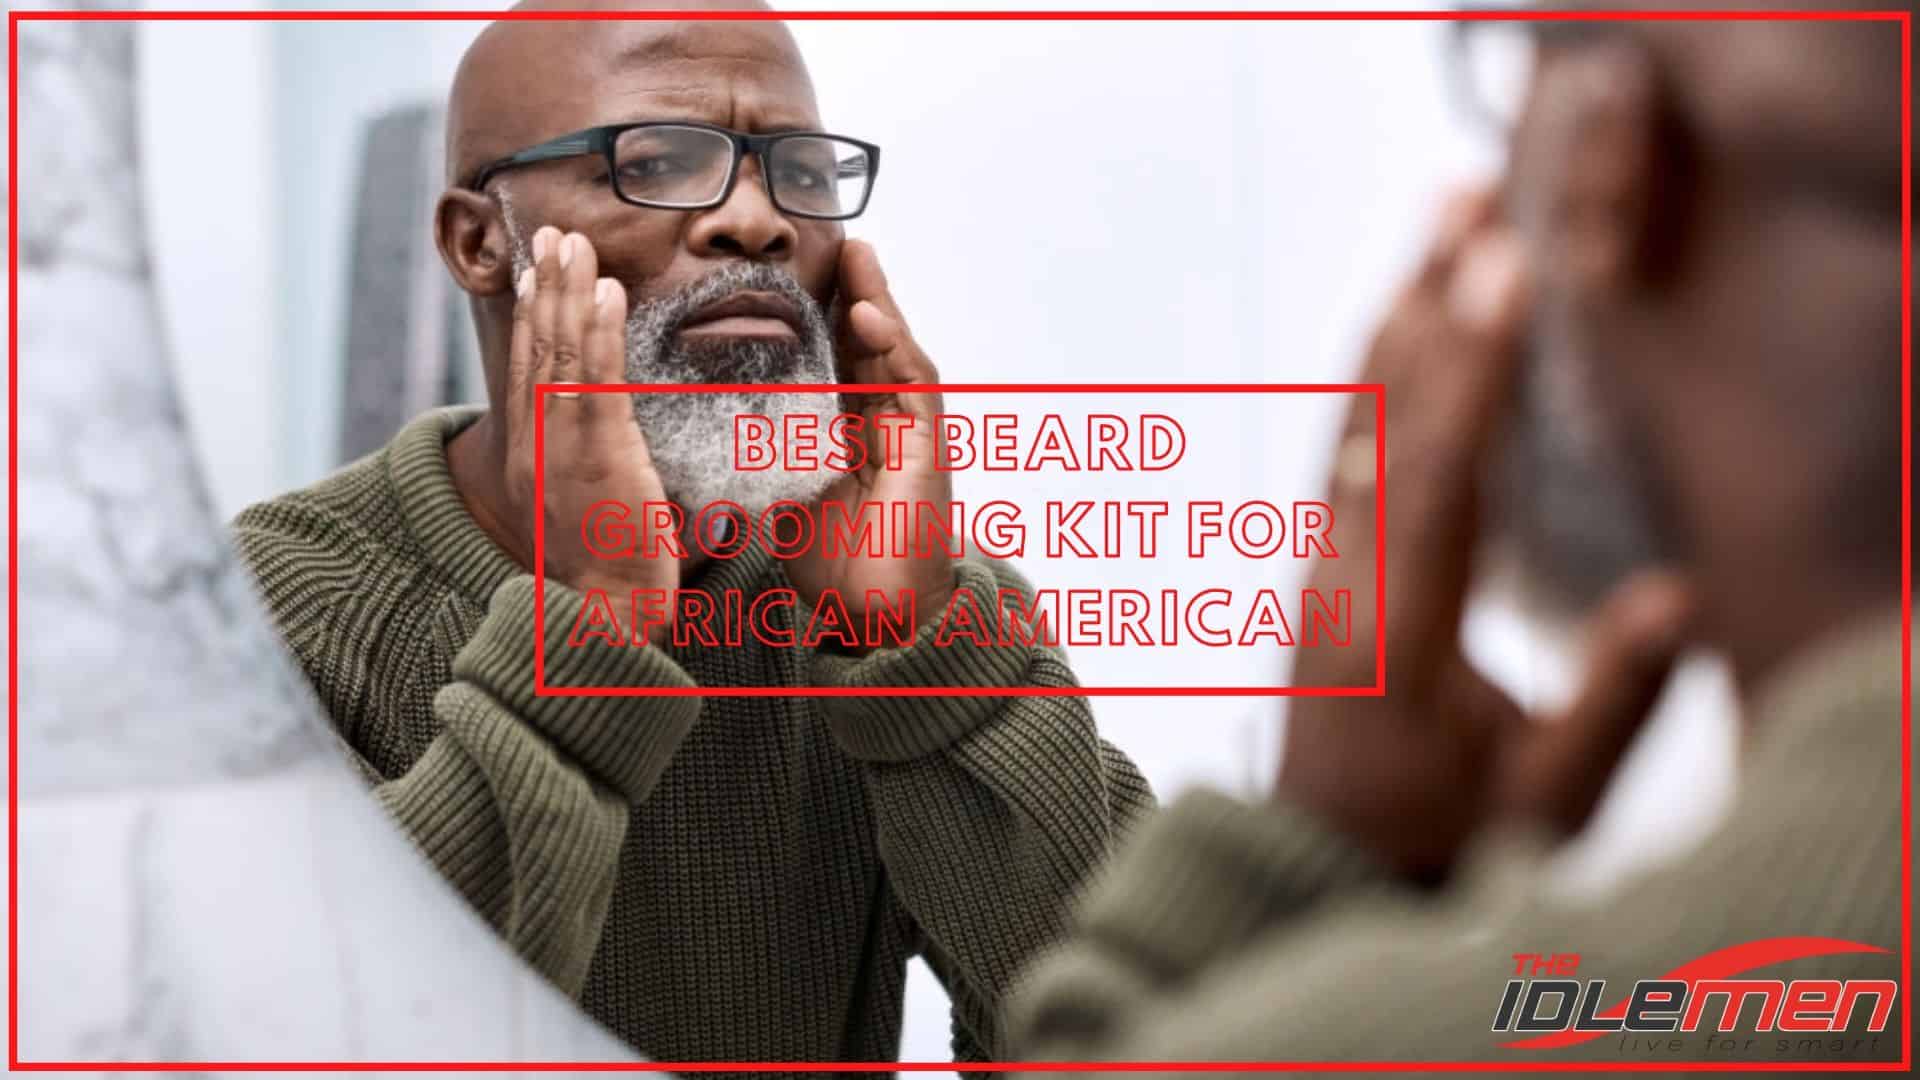 Best Beard Grooming Kit for African American